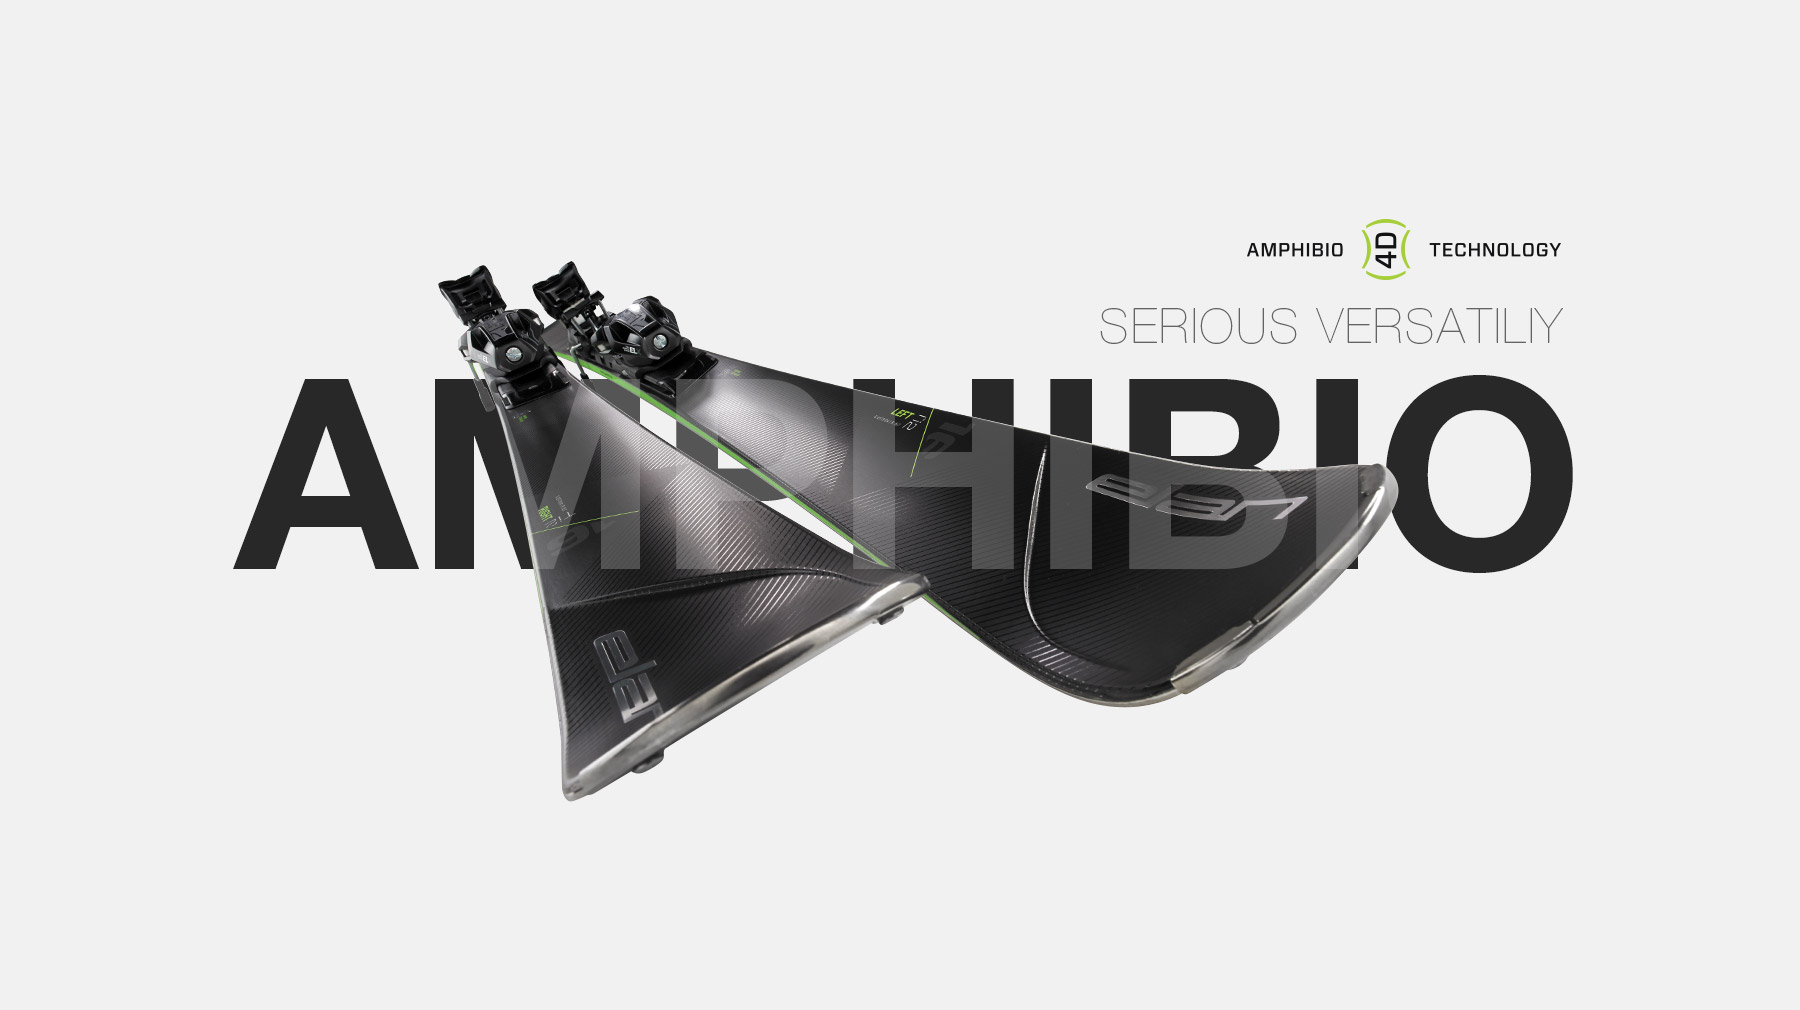 Amphibio 4D technologie van Elan